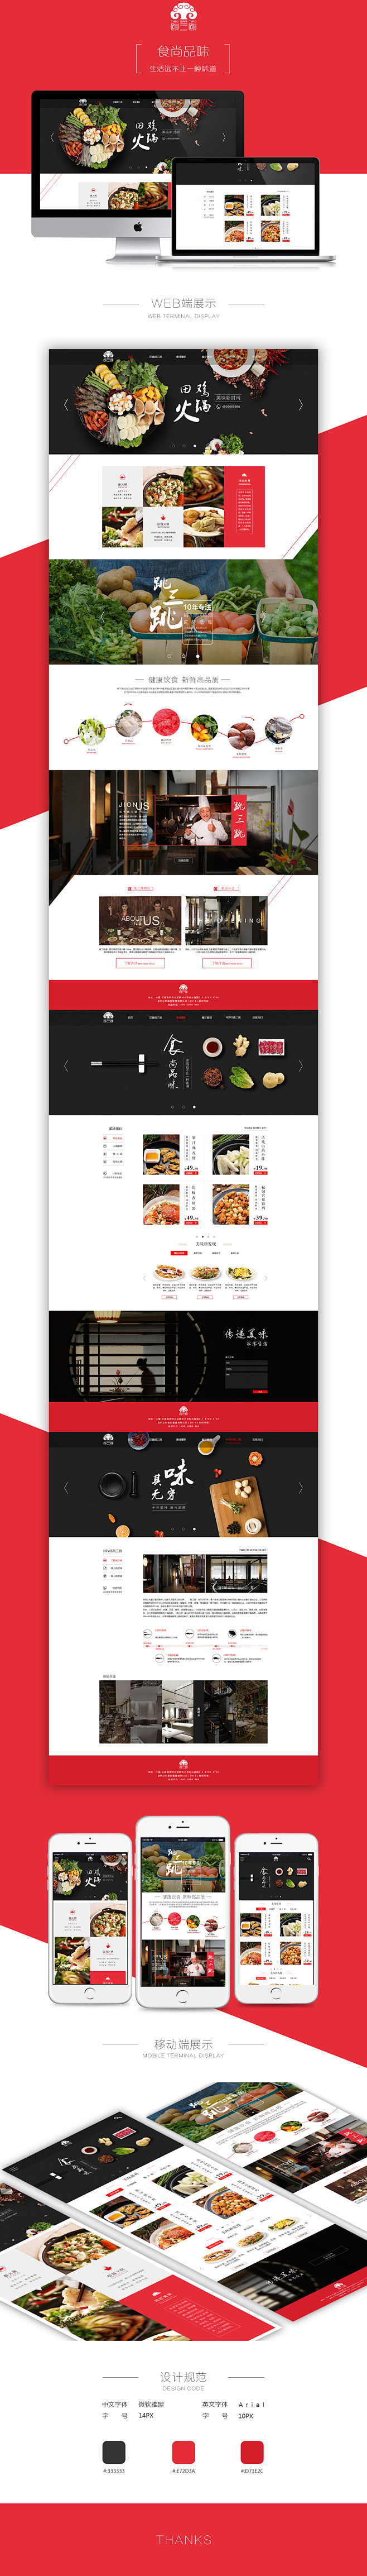 GUI展示
美食web及移动端展示